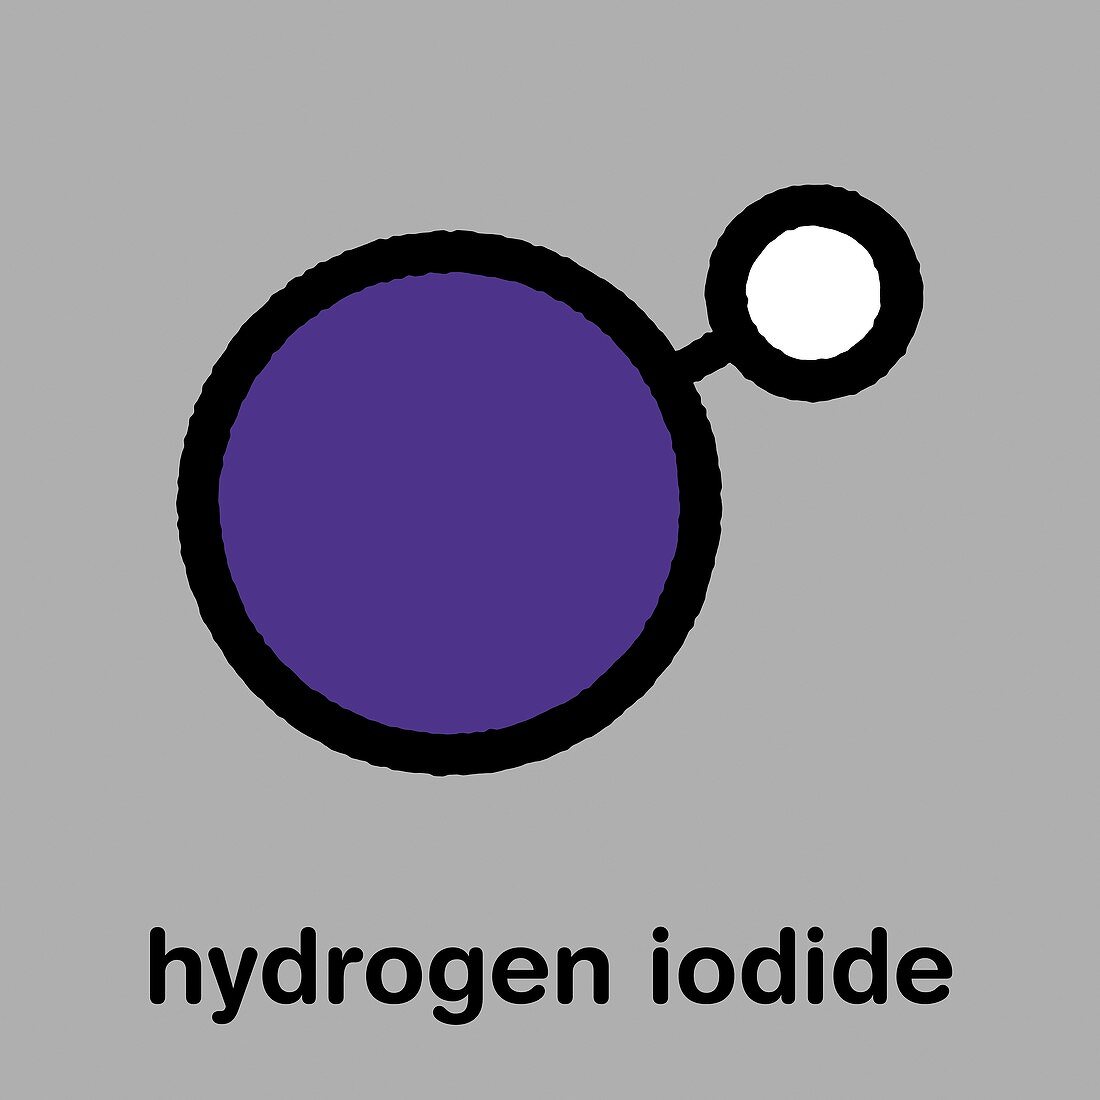 Hydrogen iodide molecule, illustration